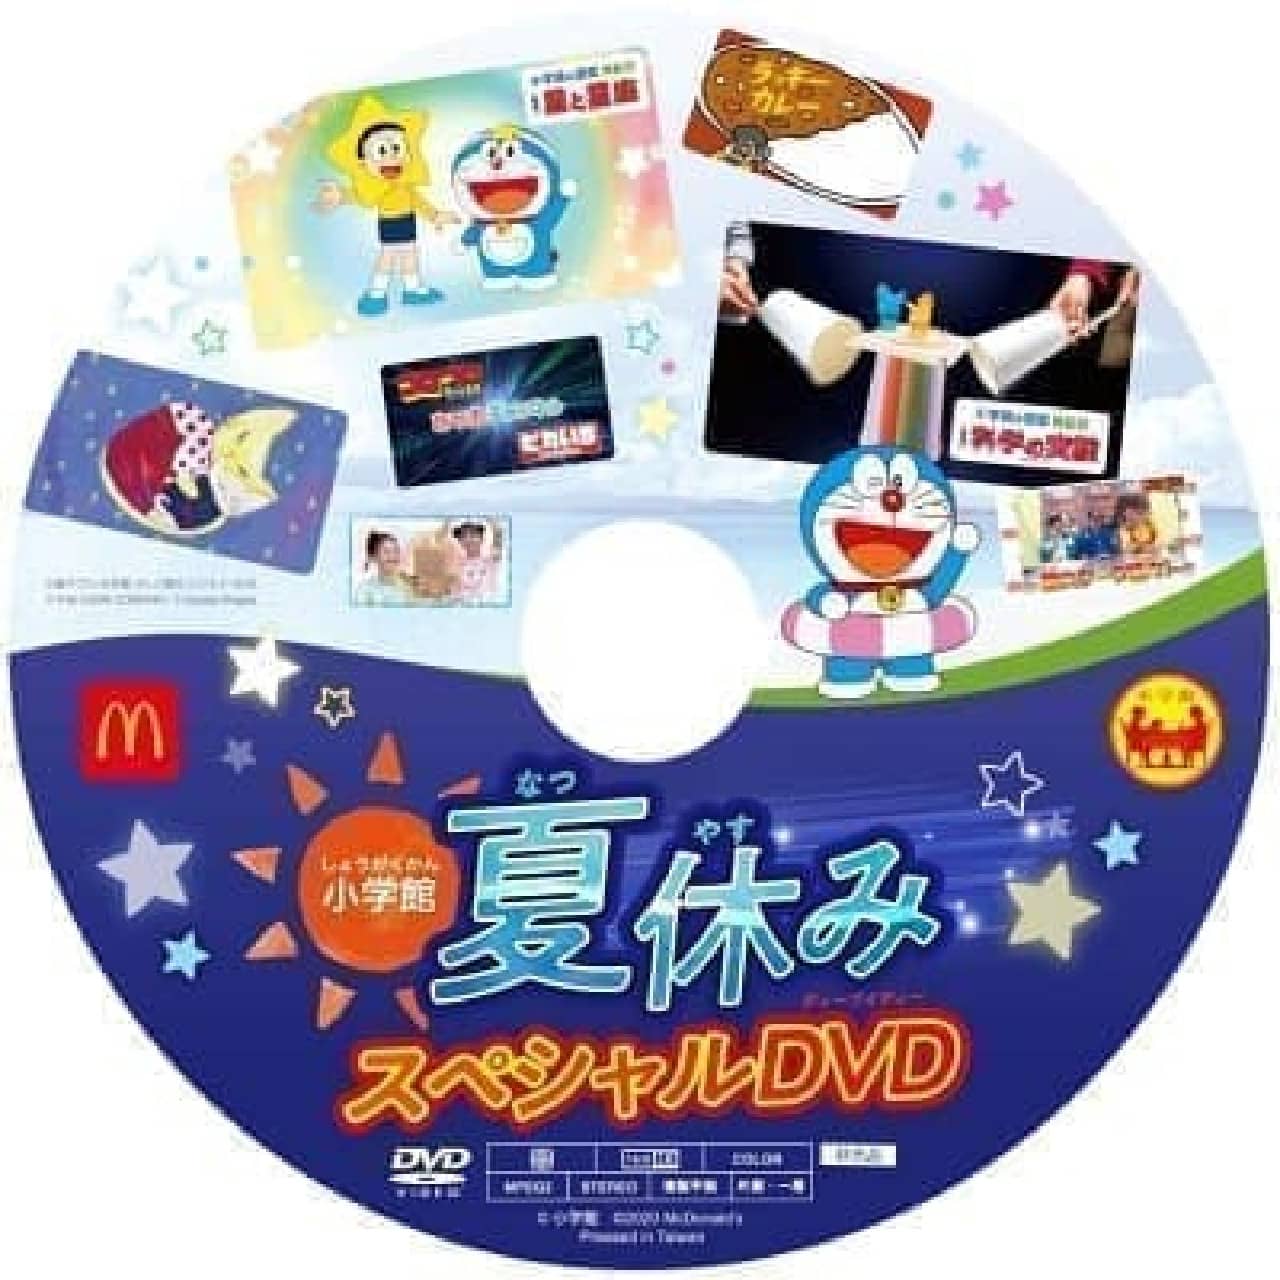 McDonald's weekend gift "Shogakukan summer vacation special DVD"